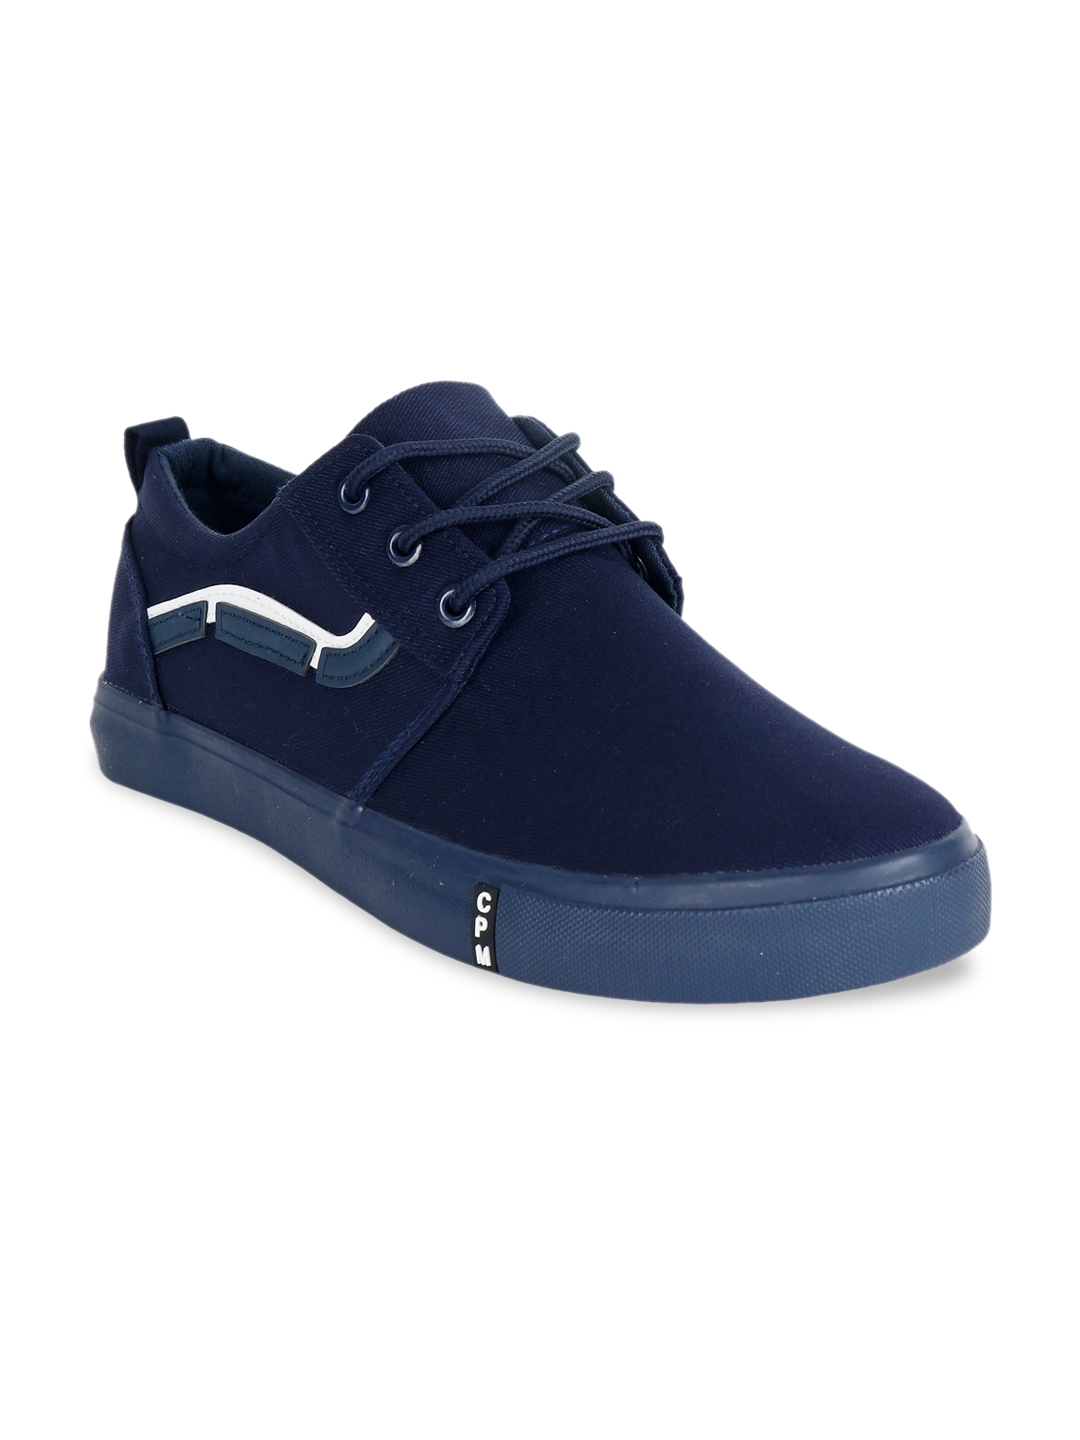 Buy CIPRAMO SPORTS Men Navy Blue Canvas Sneakers - Casual Shoes for Men ...